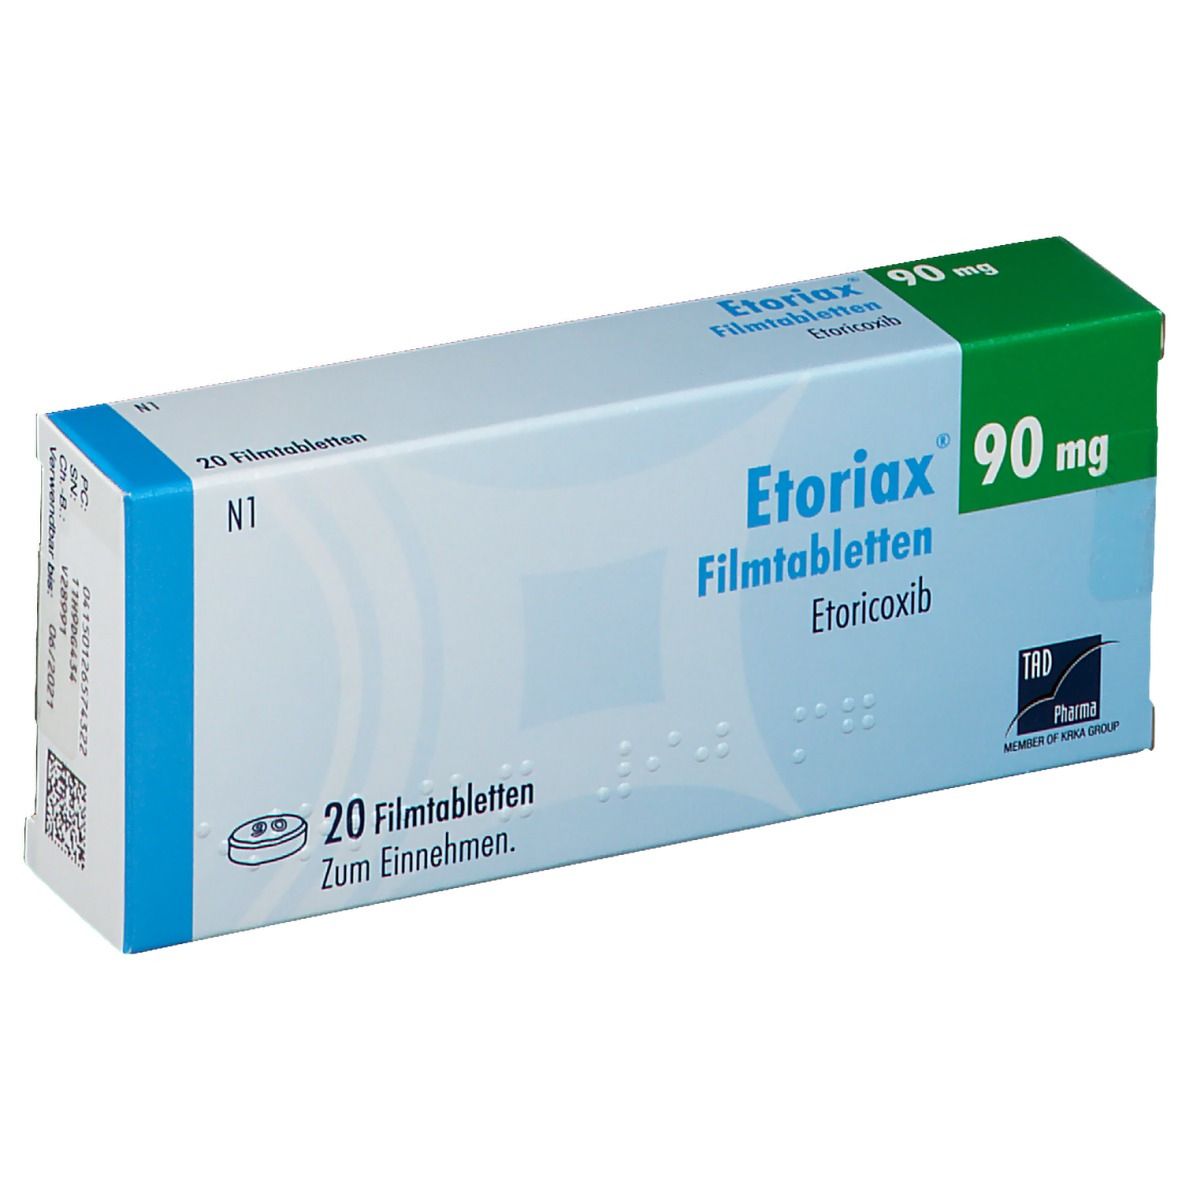 Etoriax® 90 mg